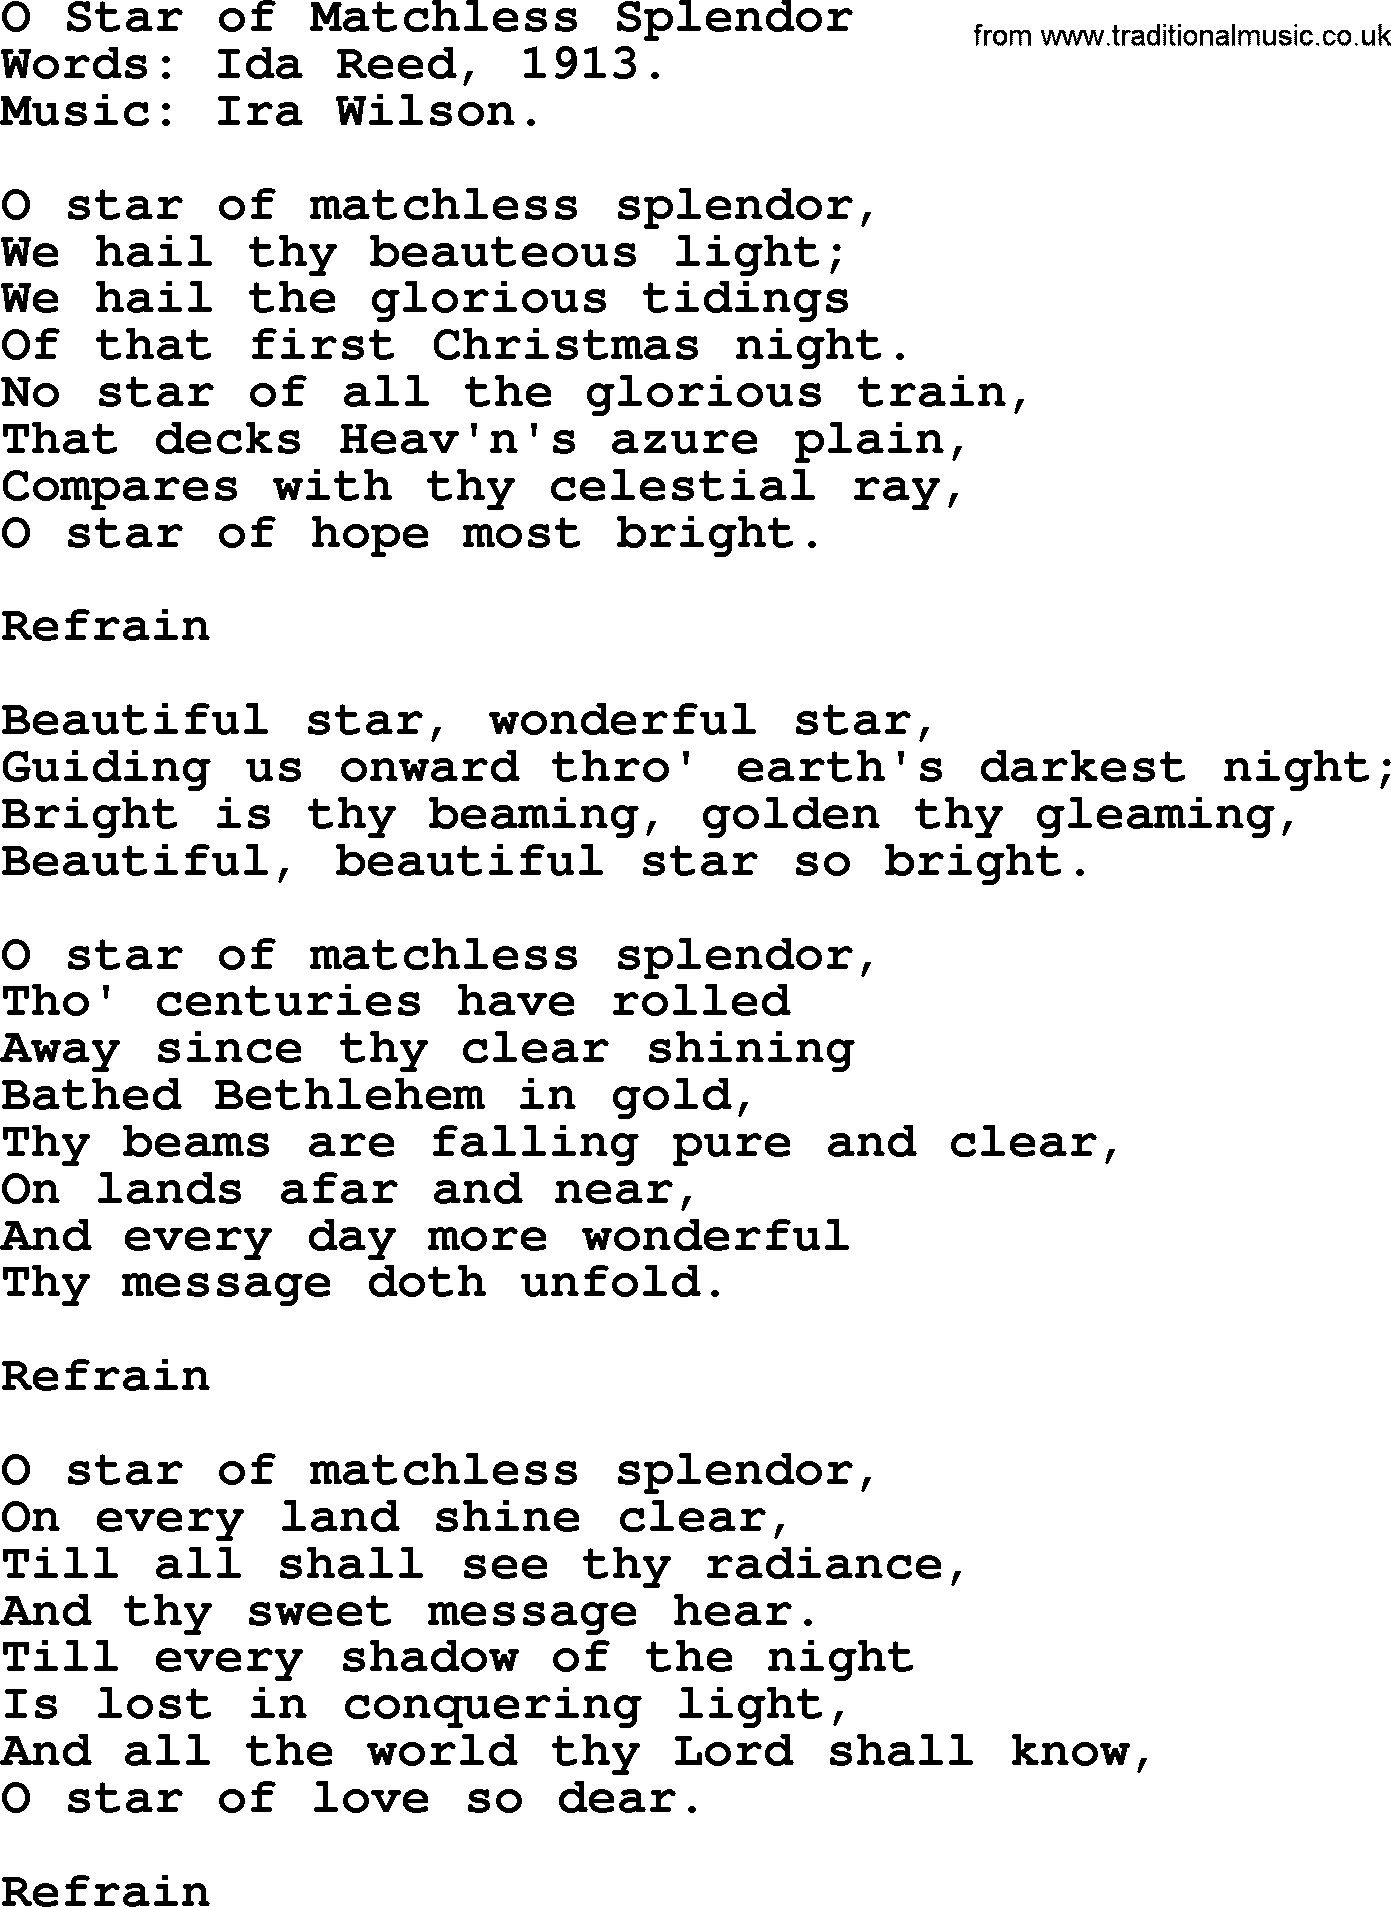 Christmas Hymns, Carols and Songs, title: O Star Of Matchless Splendor, lyrics with PDF